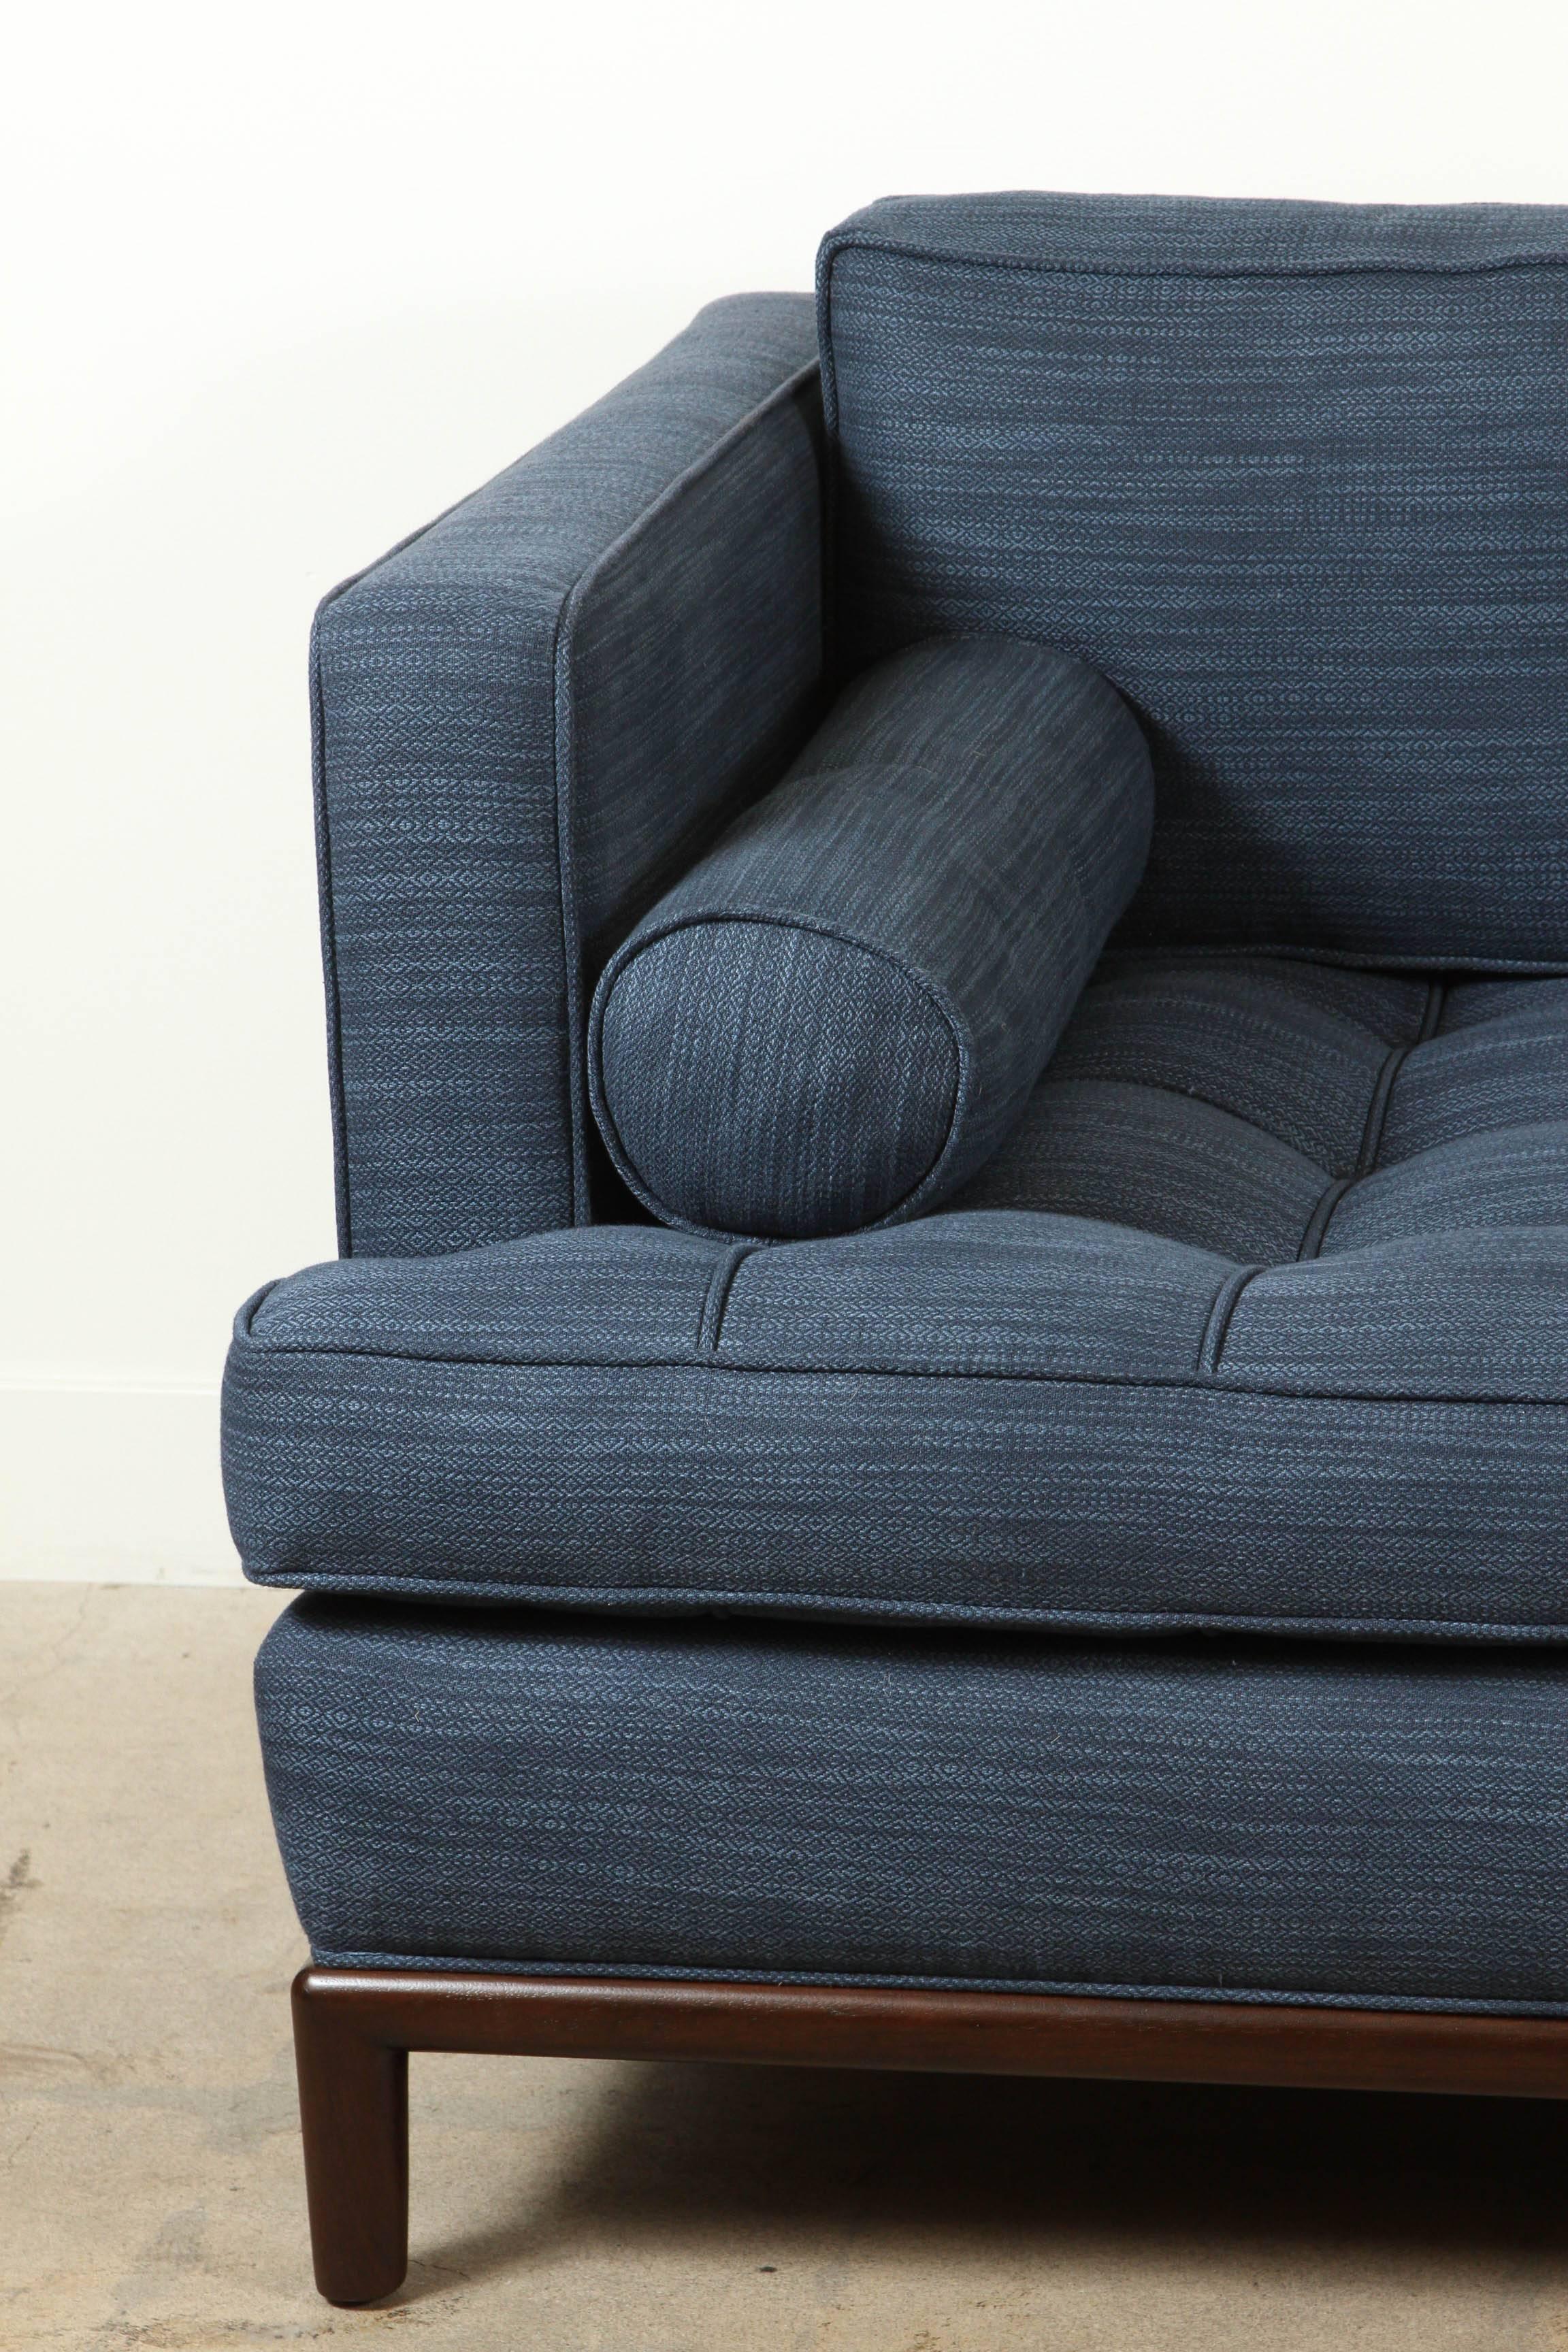 Montebello sofa by Lawson-Fenning. Upholstered in Zak + Fox 